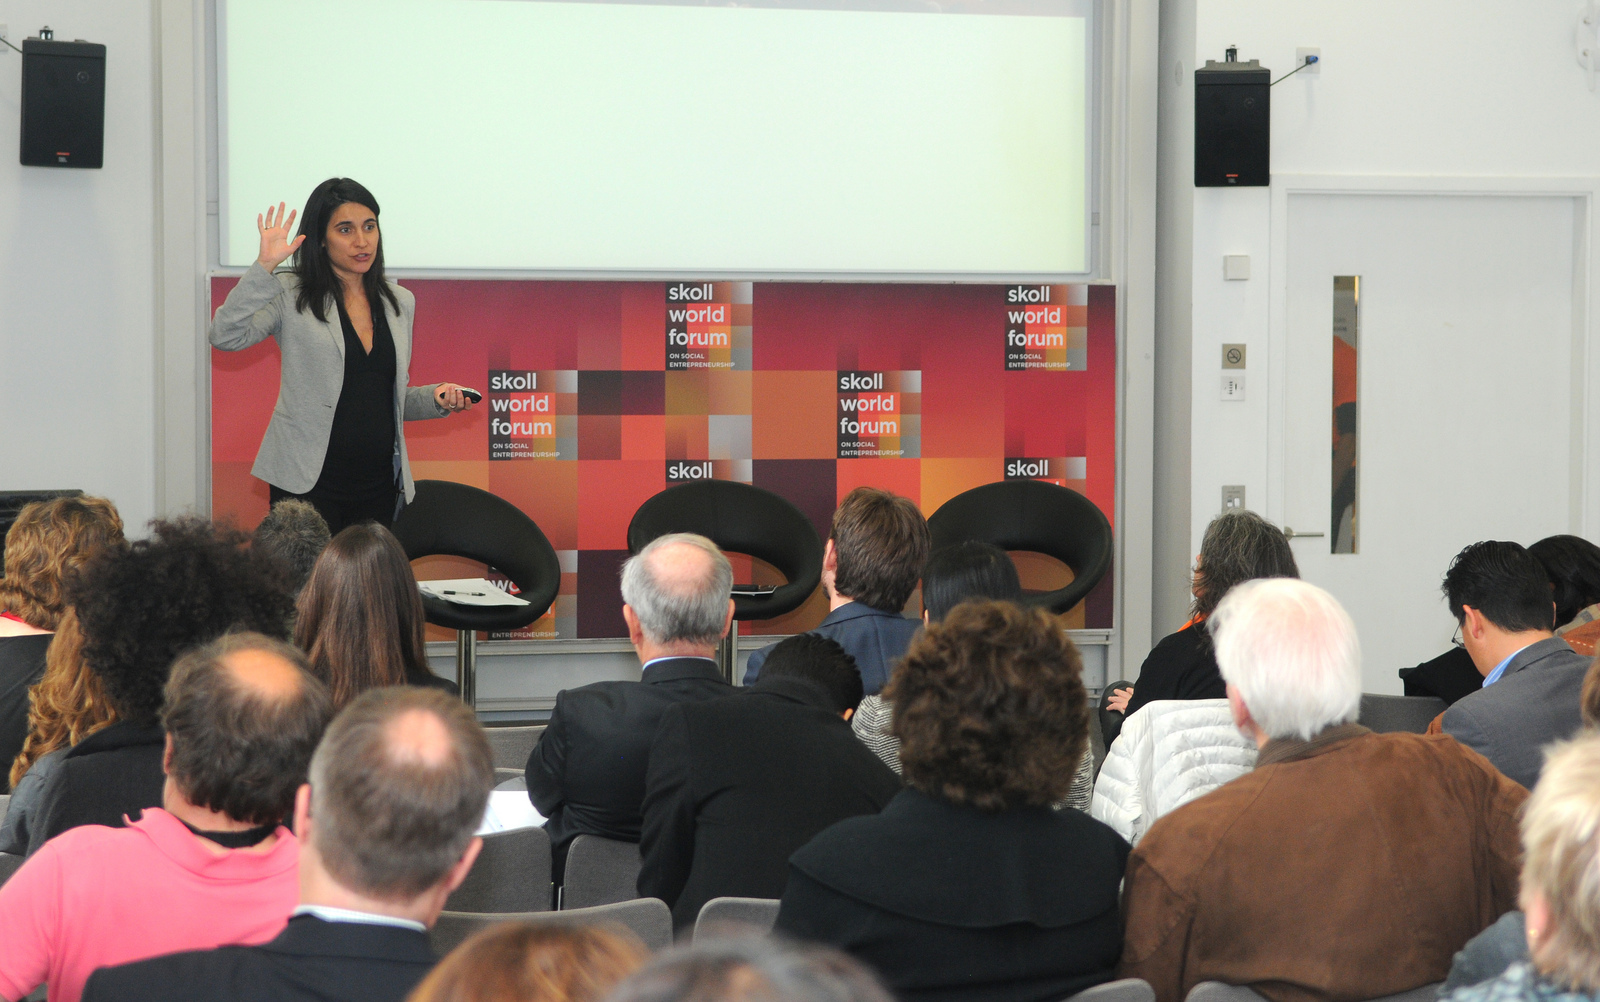 Julia Bacha presenting at the 2013 Skoll World Forum